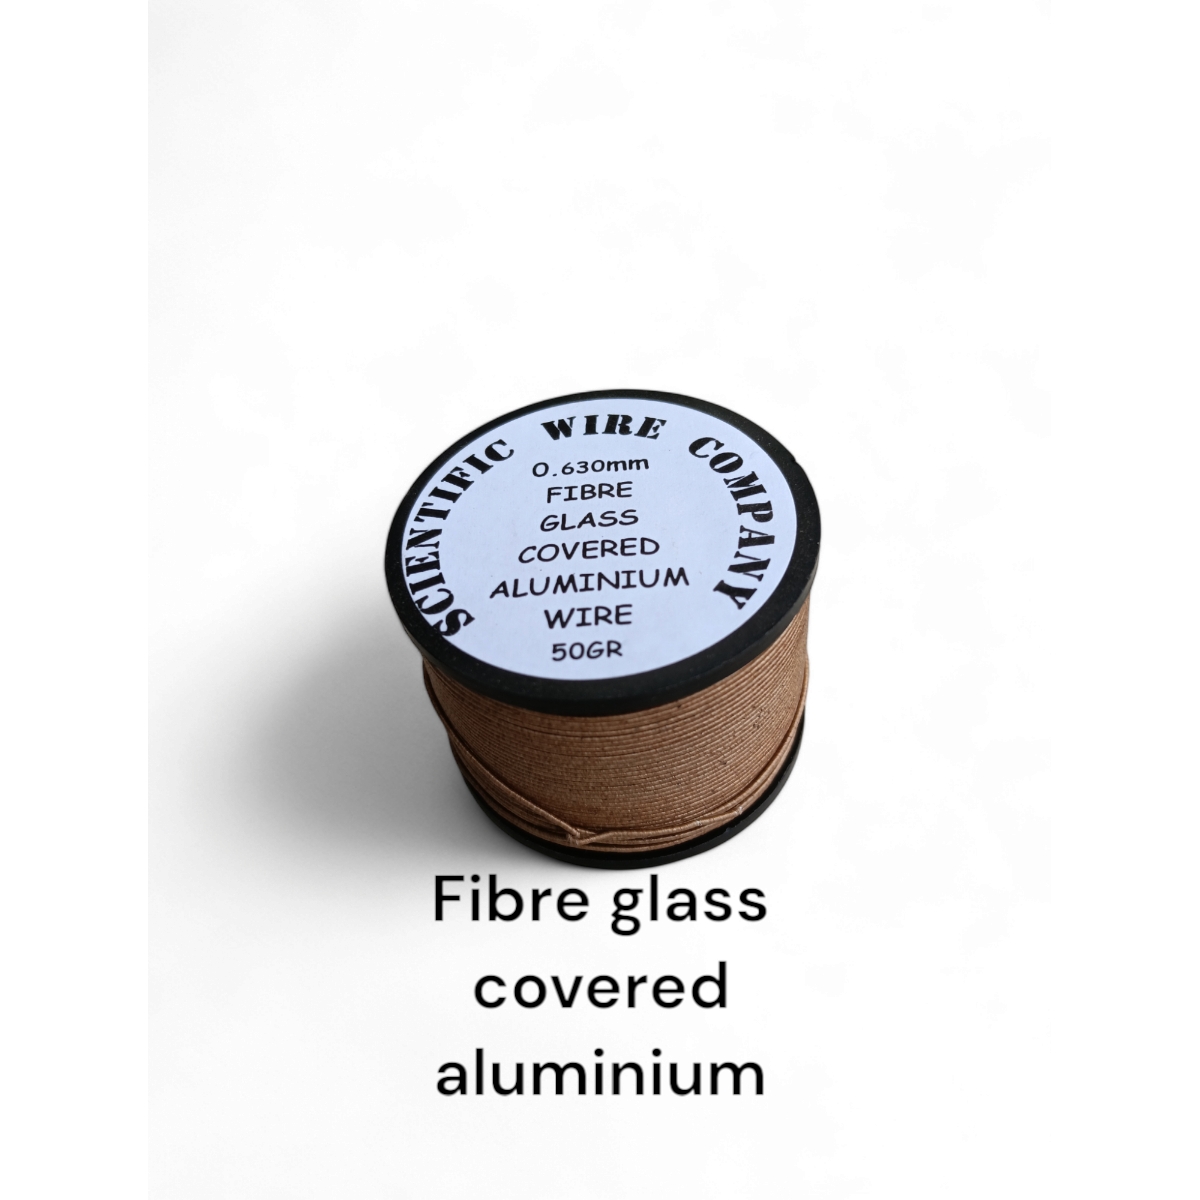 FIBRE GLASS COVERED ALUMINIUM